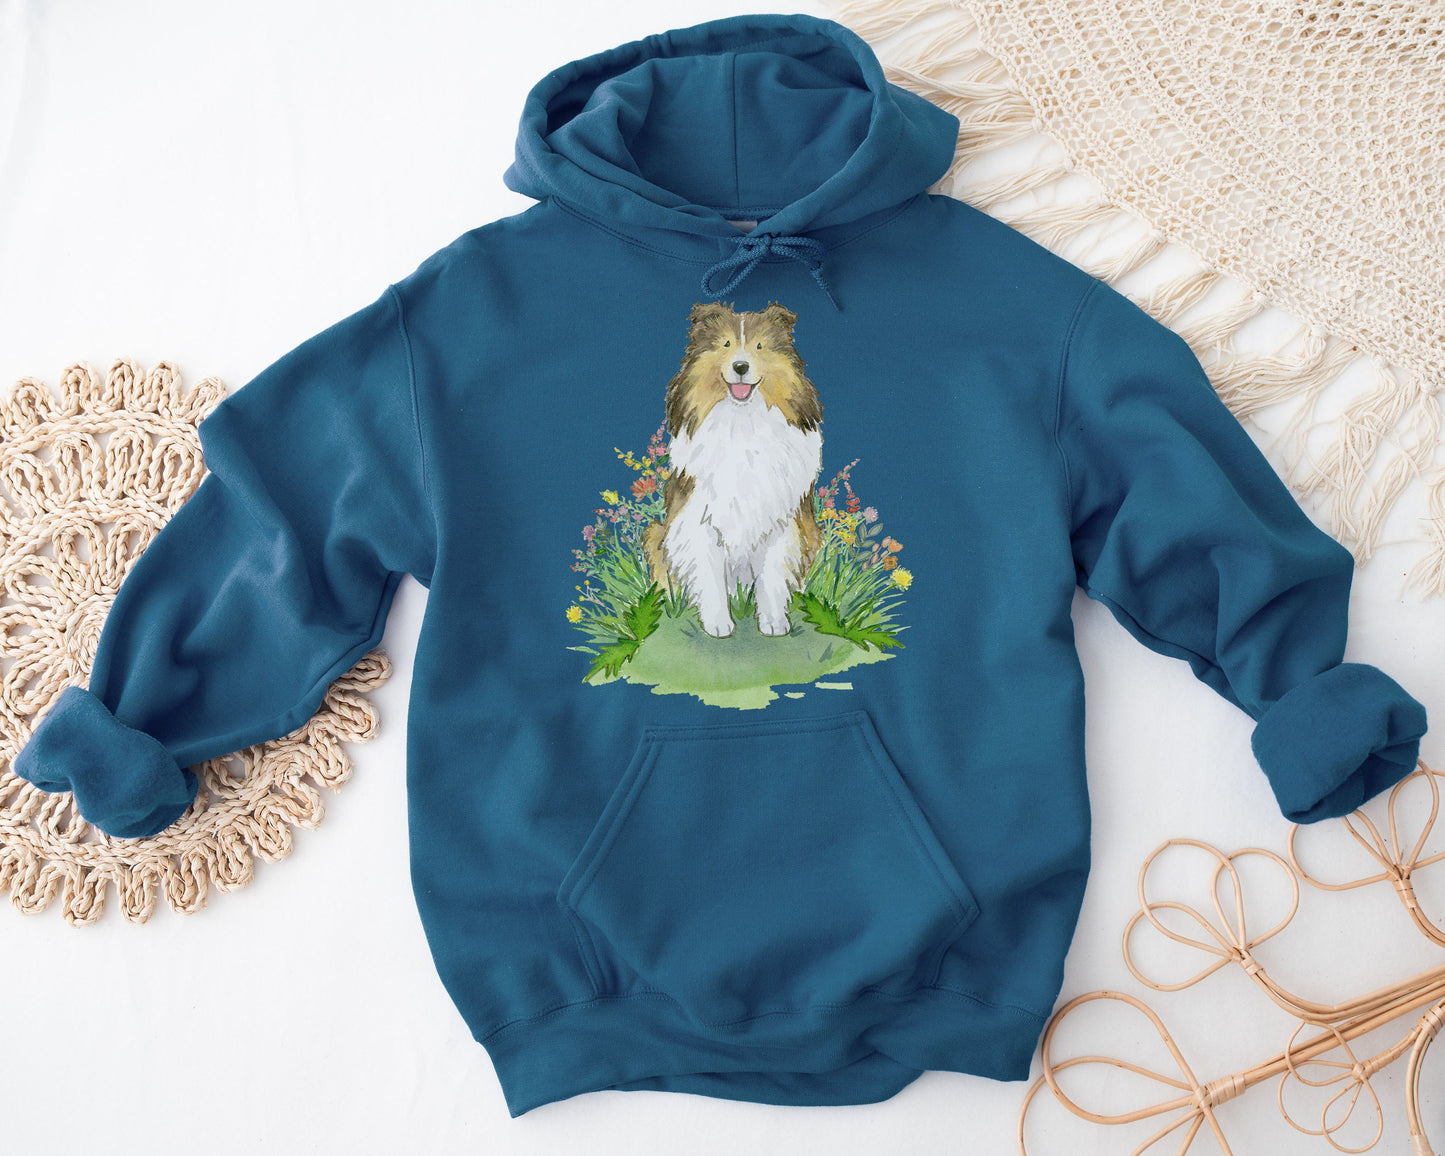 Sheltie Hoodie, Shetland Sheepdog Sweatshirt, Sable Sheltie Hoody, Sheltie Gift, Sheltie Lover, Dog Lover Gift, Dog Mom Gift, Cute Dog